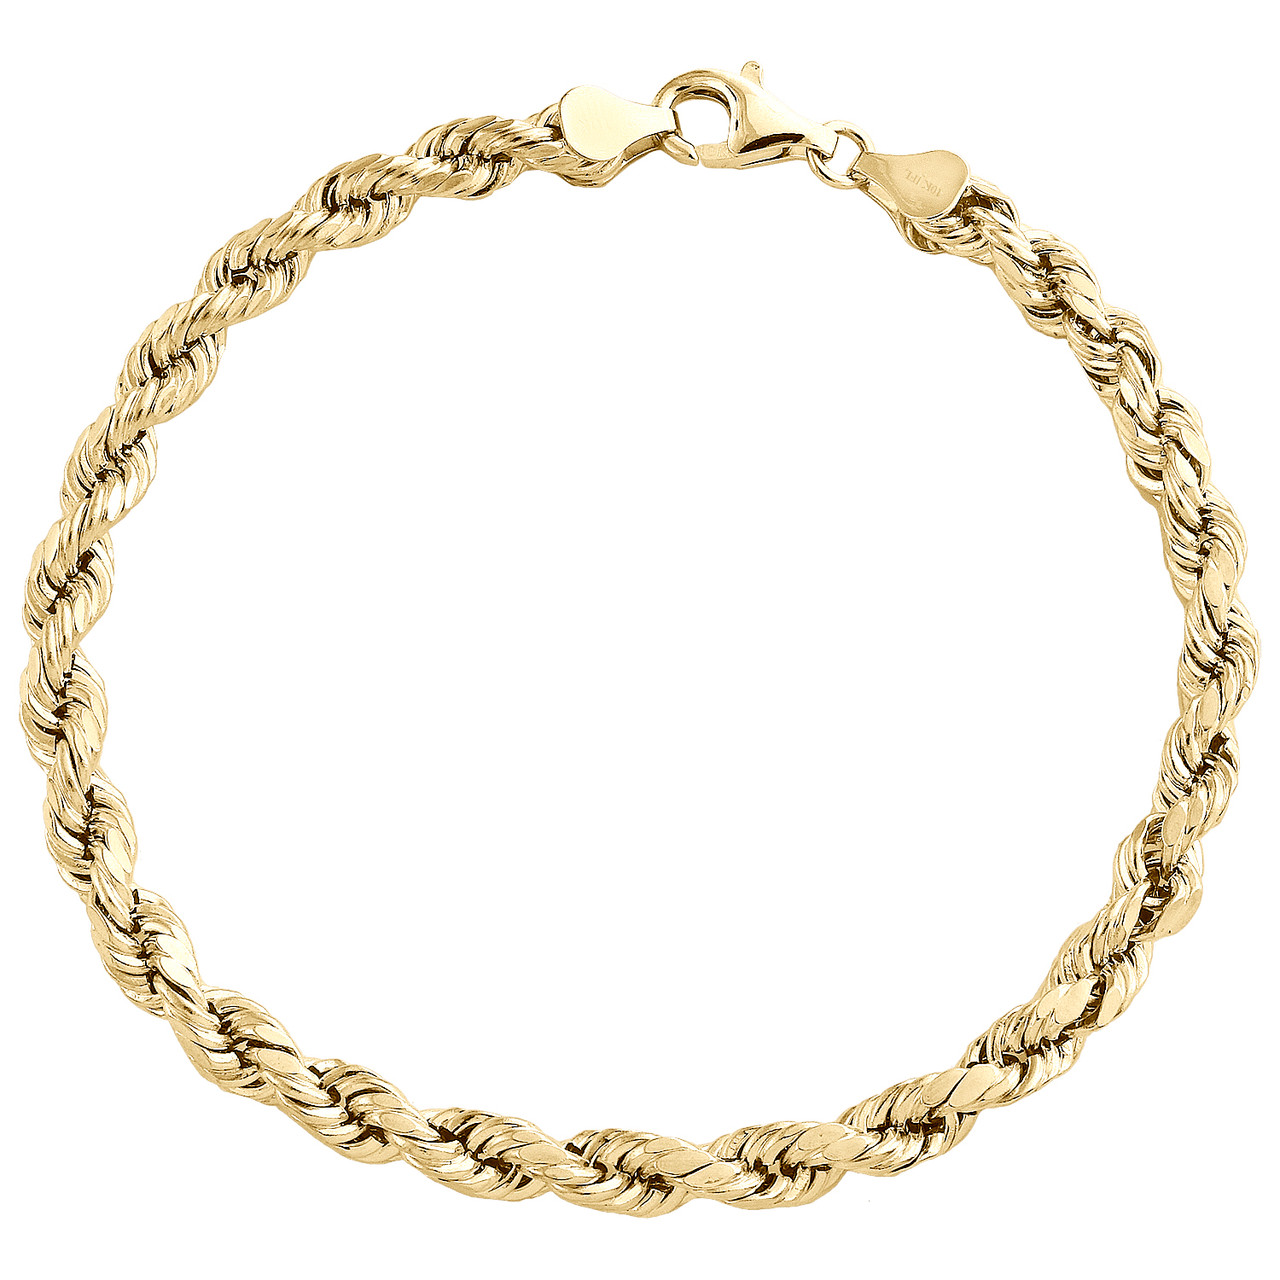 Solid Gold Rope Bracelet  The Gold Gods  The Gold Gods